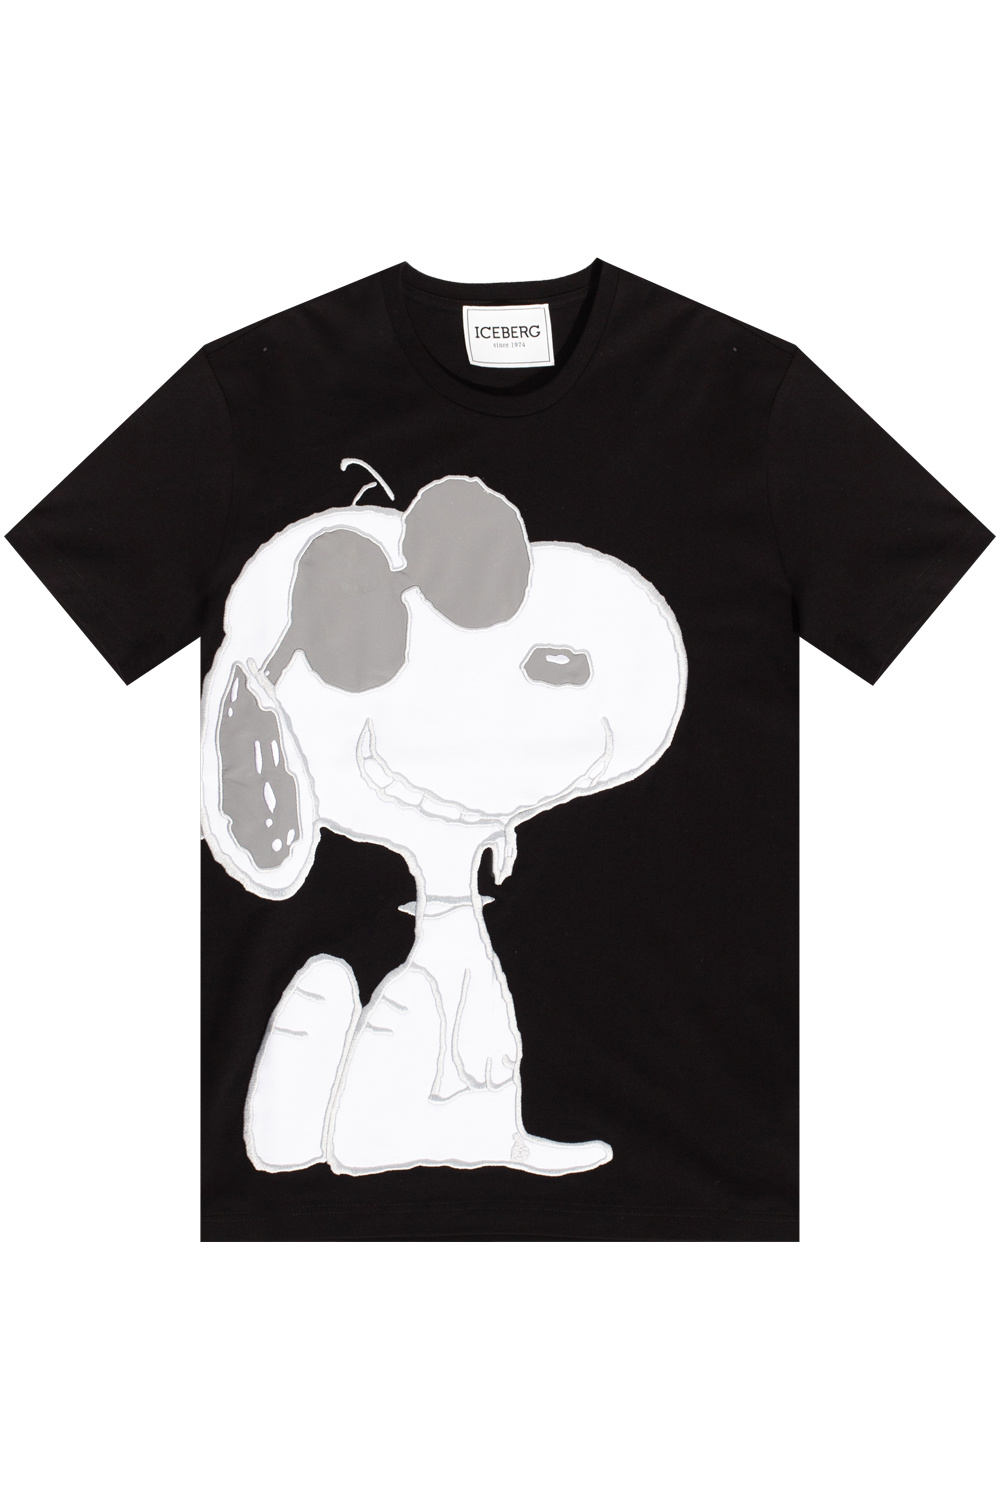 Iceberg Snoopy T-shirt